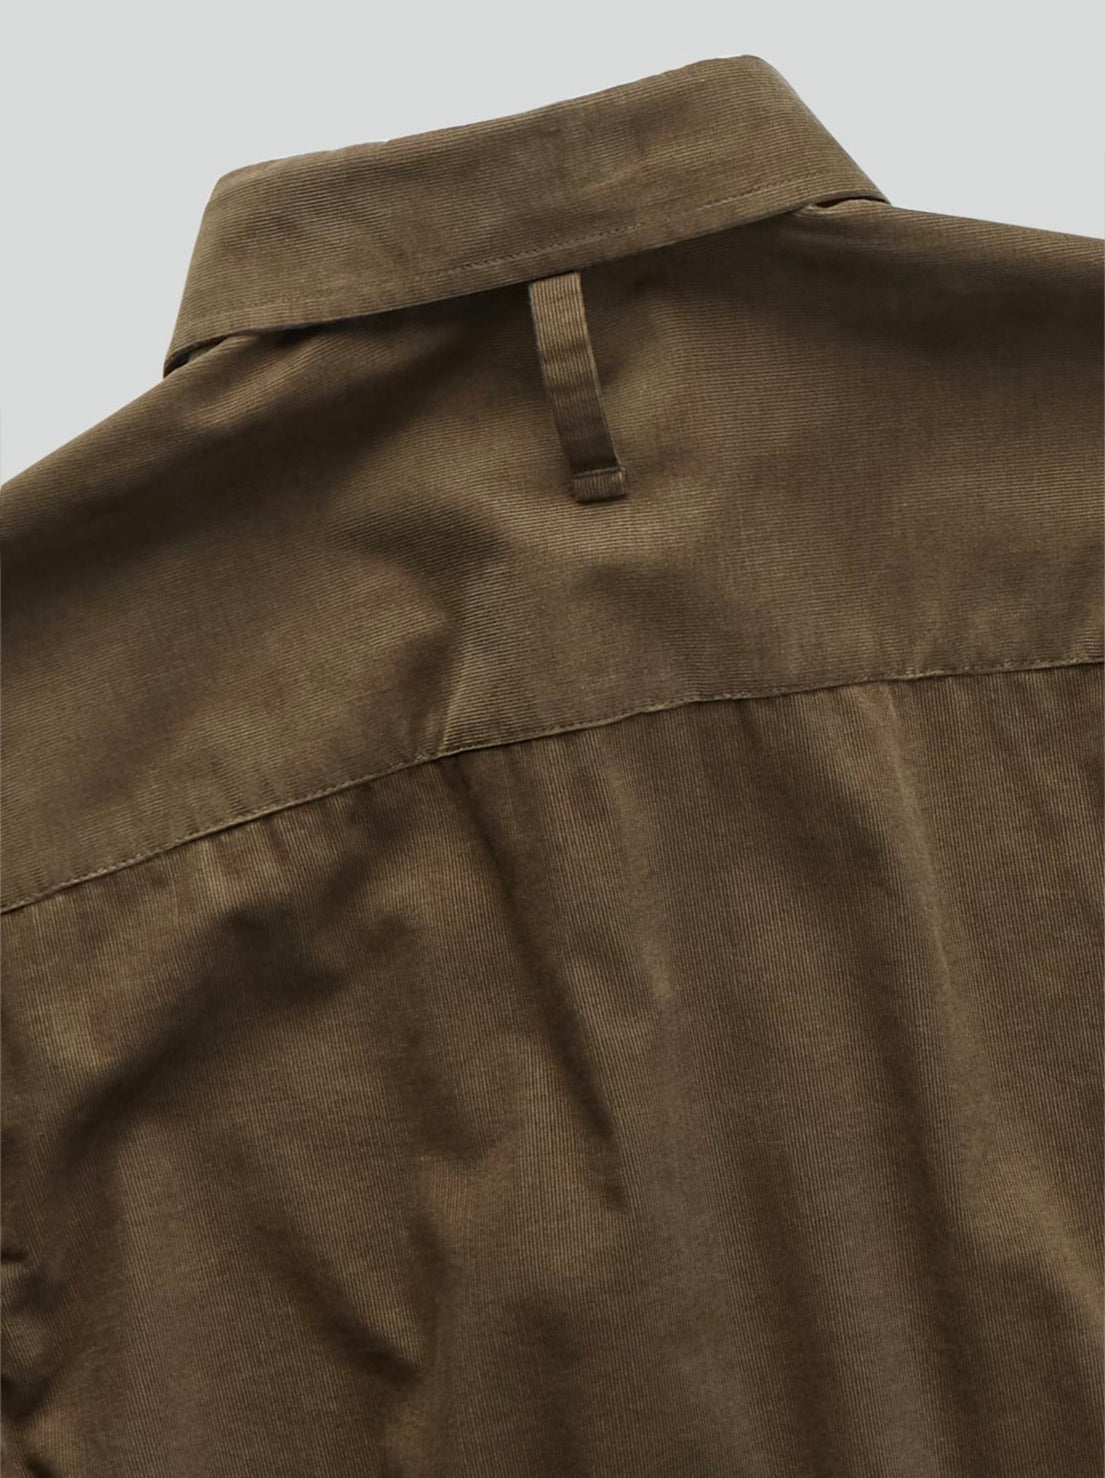 No Nationality - Arne 5723 - Regular Cotton Corduroy Shirt - Dark Clay